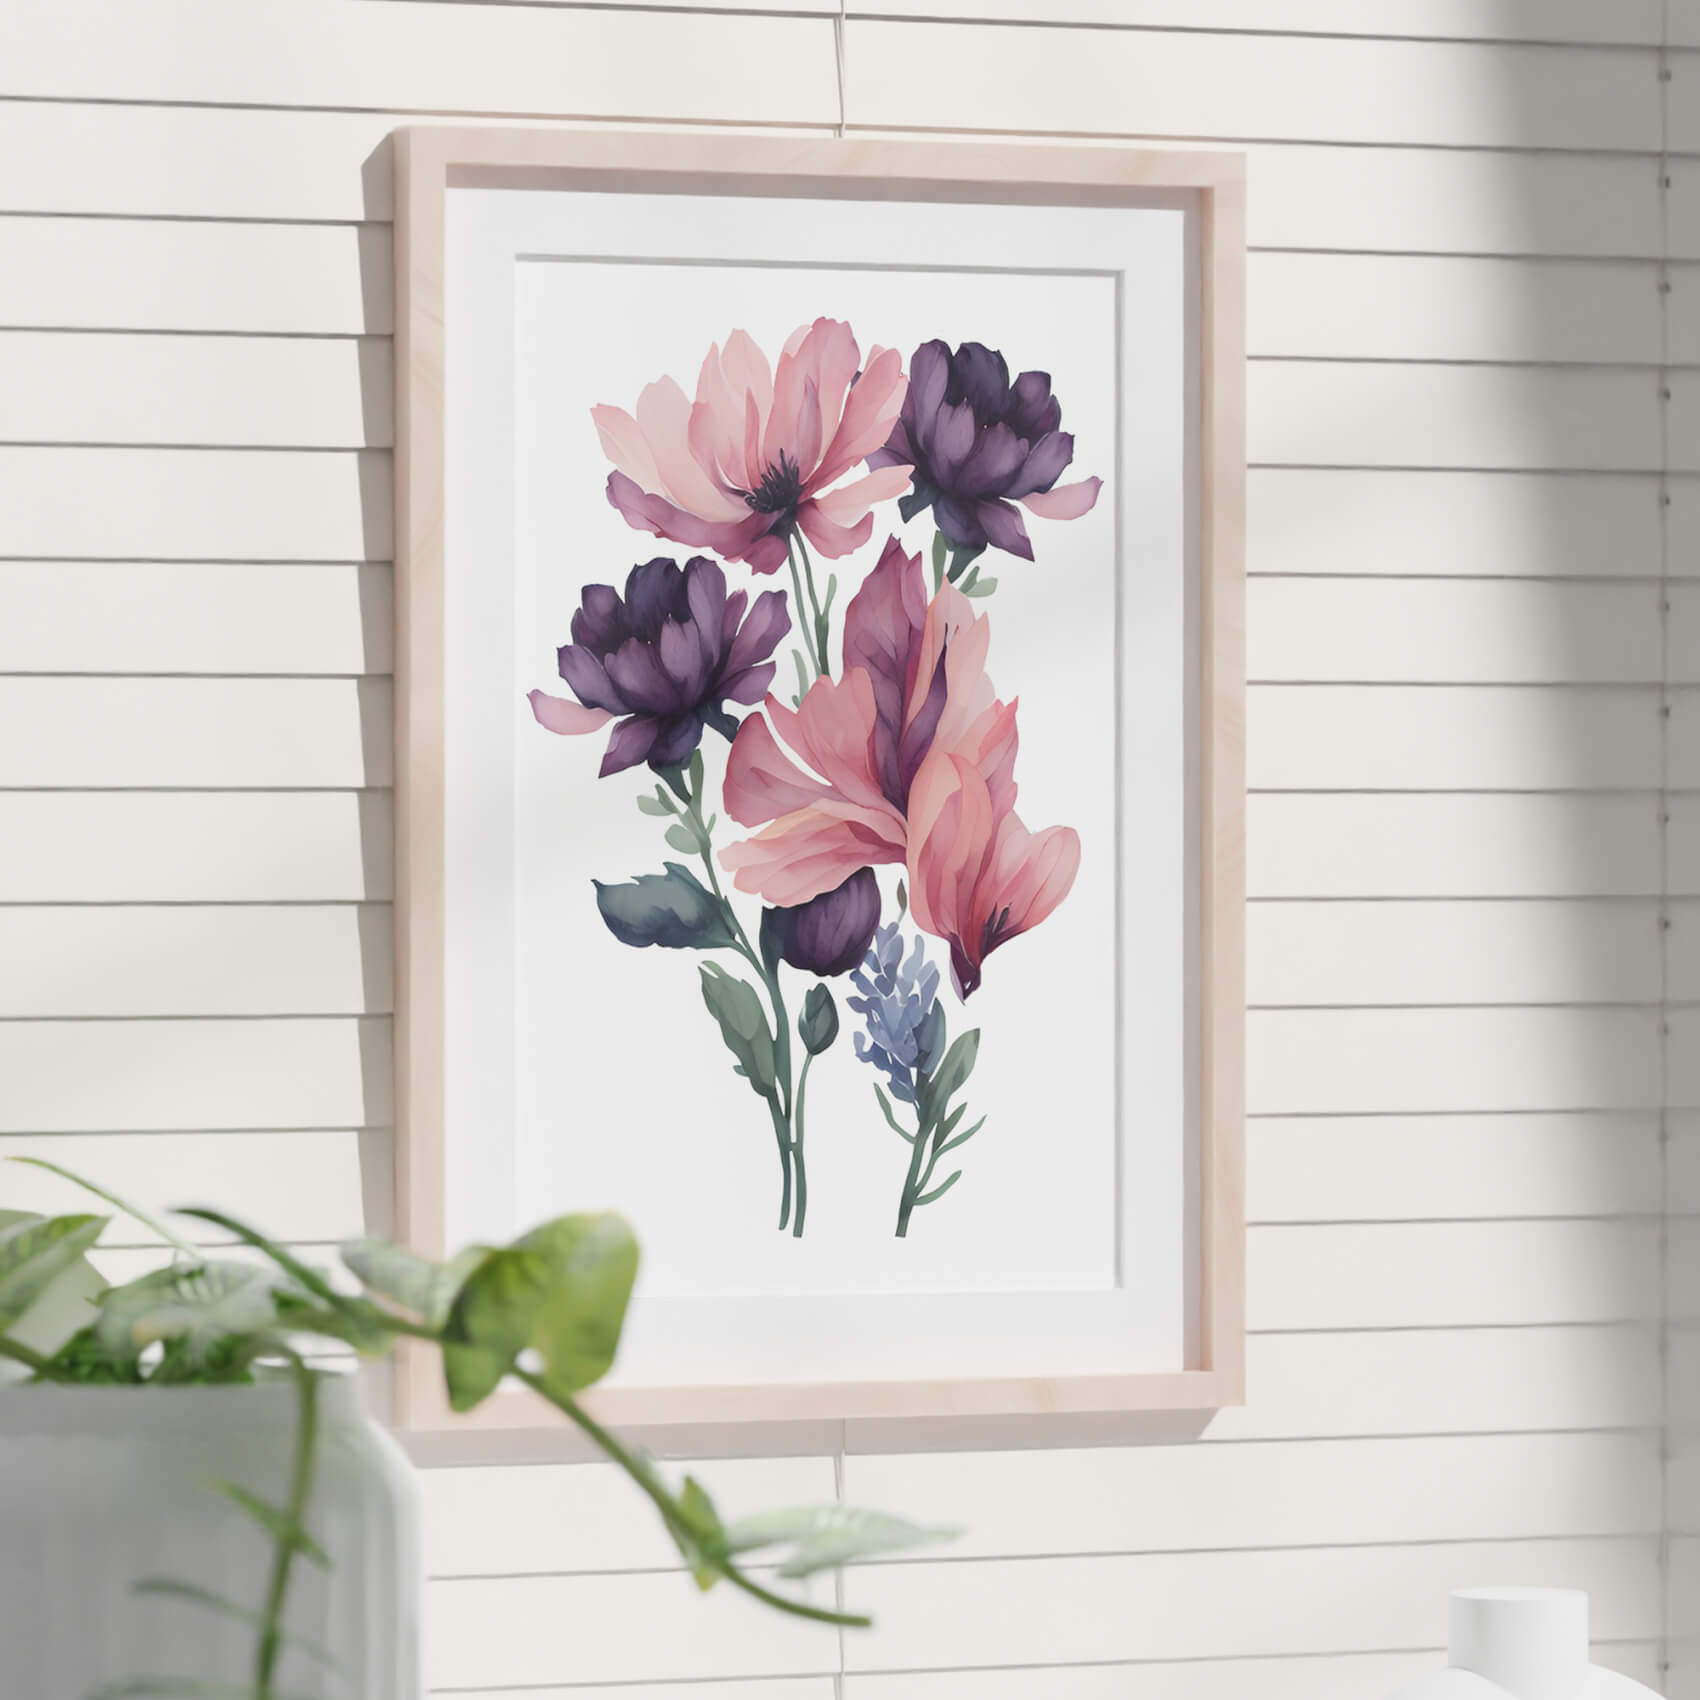 Bloom Into You - Digital Wall Art Set Of 2